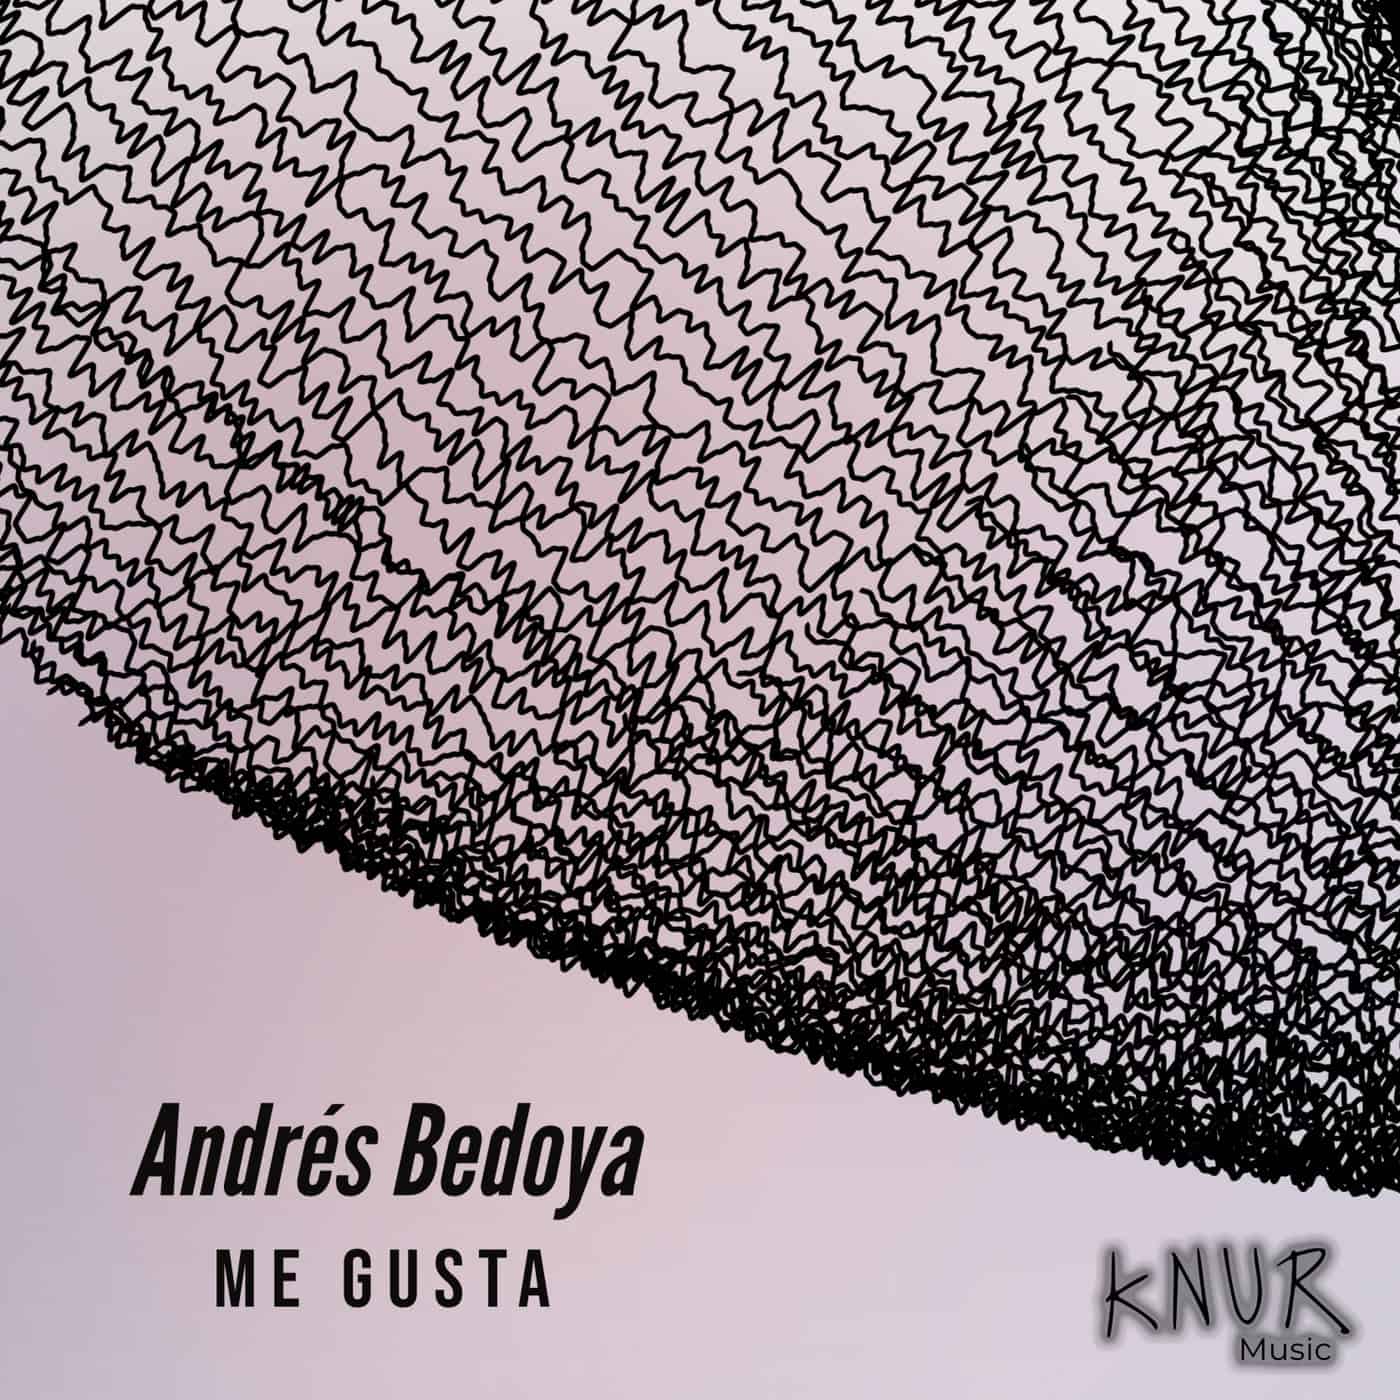 image cover: ANDRES BEDOYA - Me Gusta / KNUR036